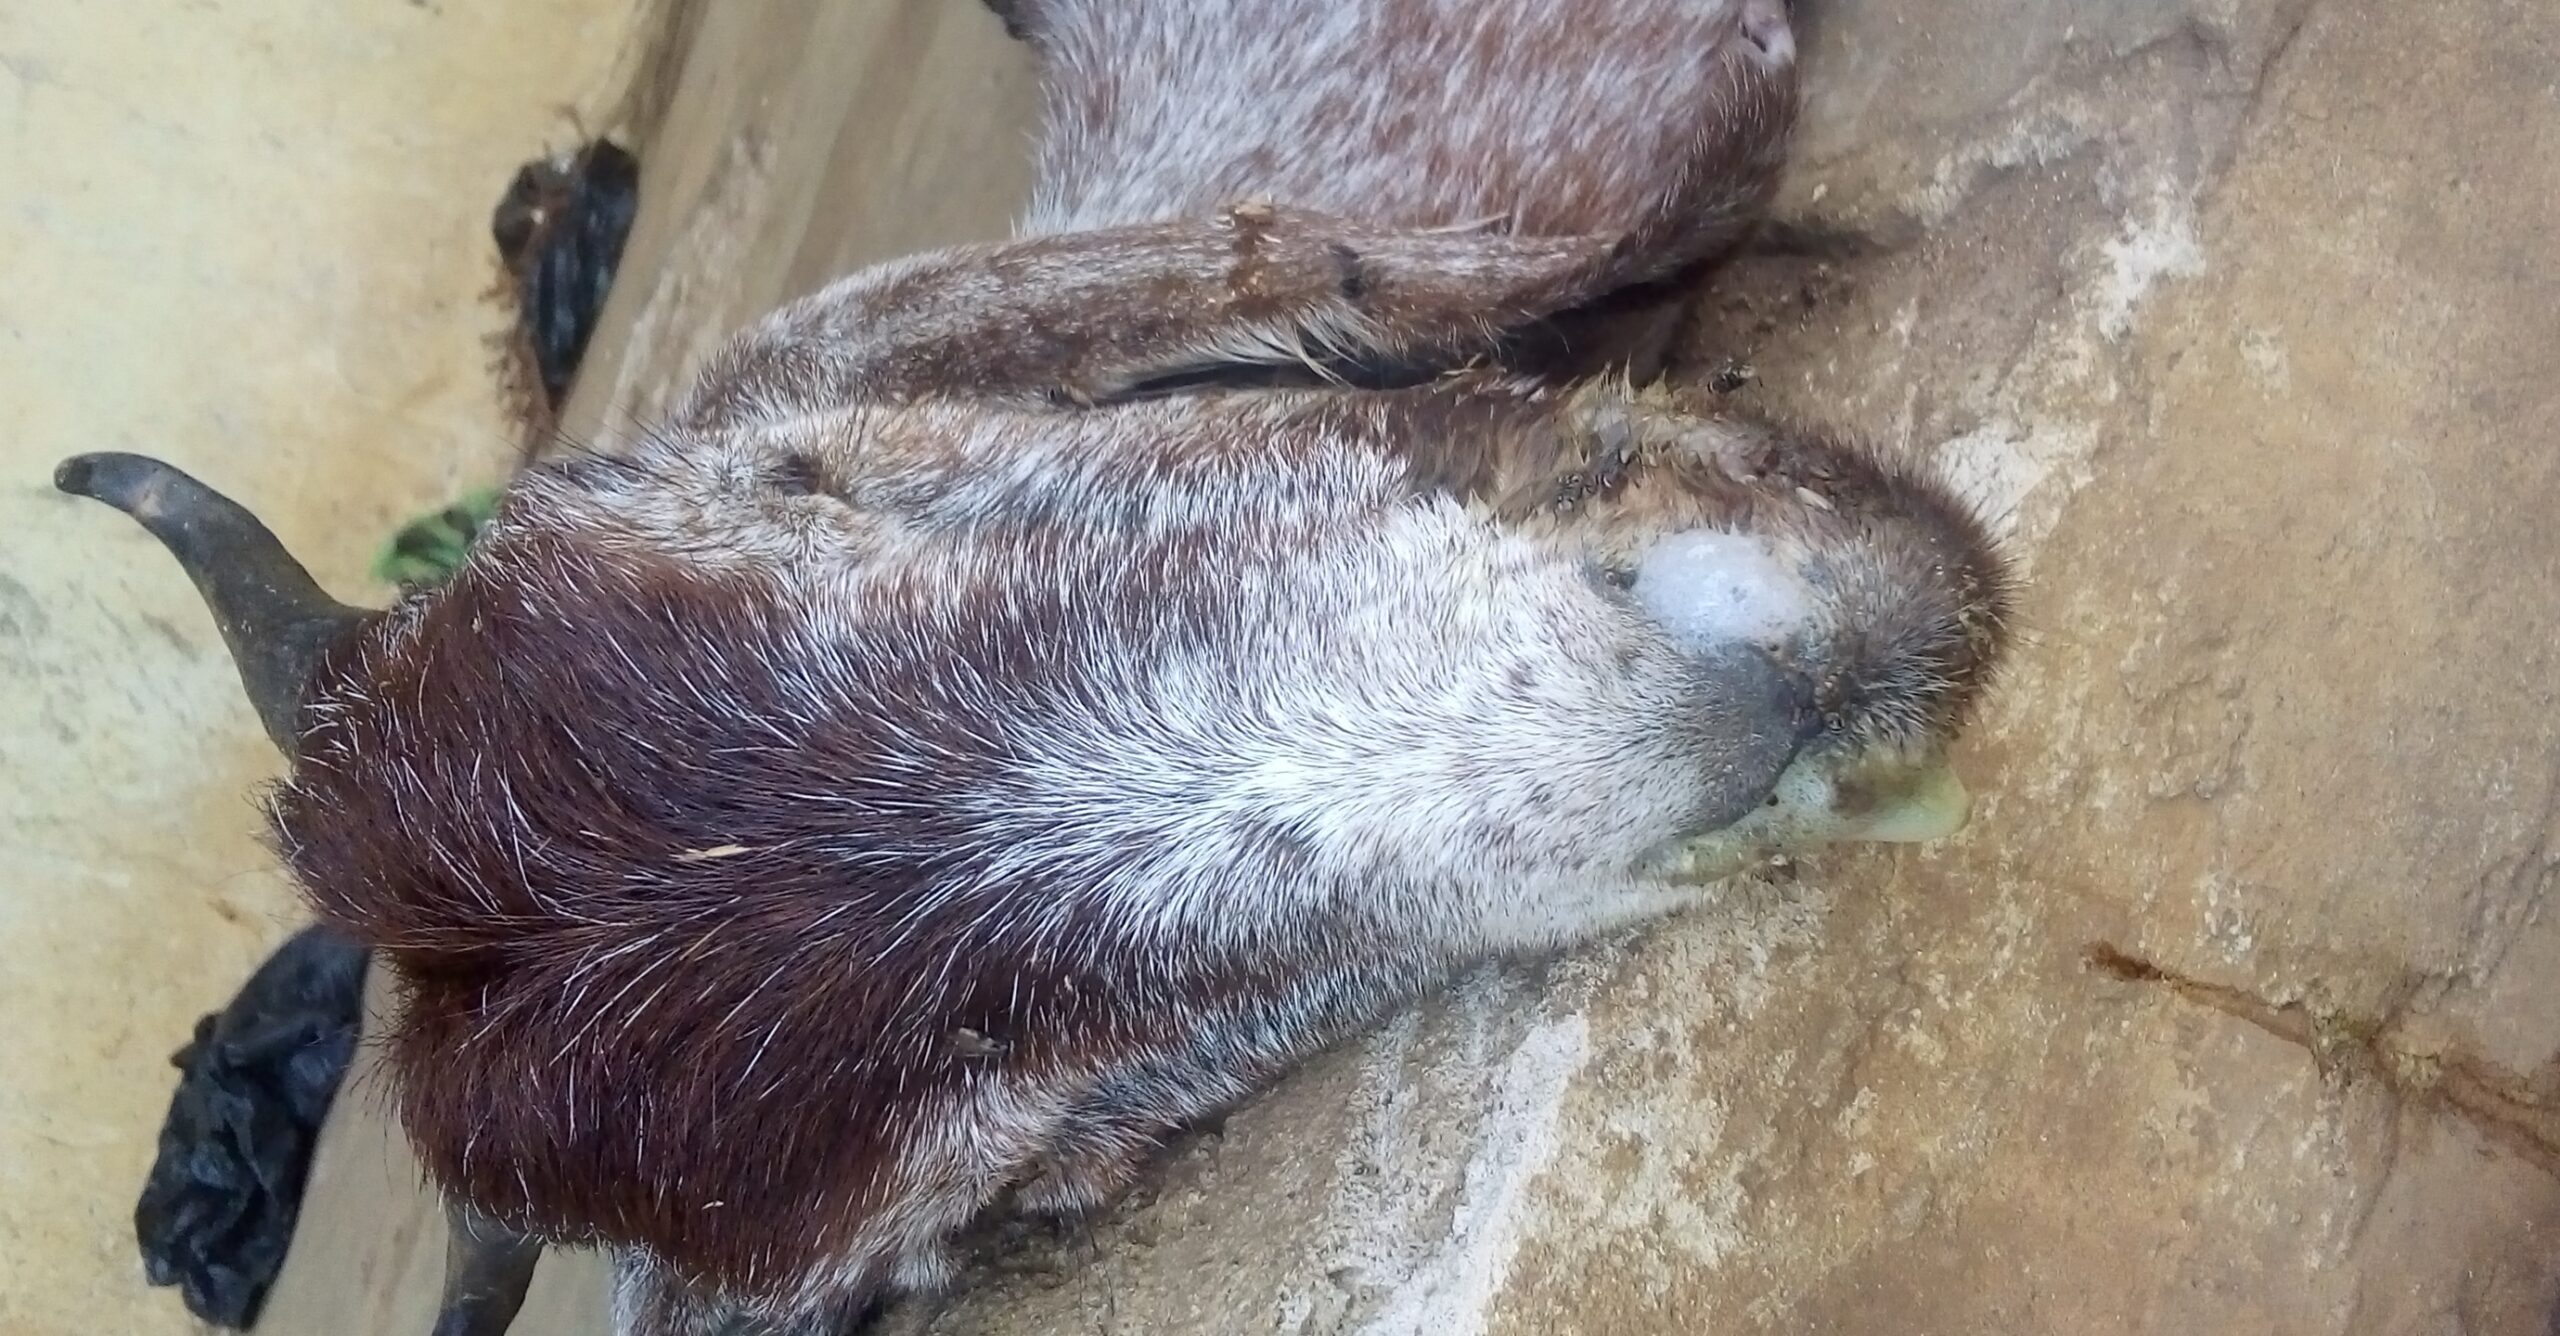 dead goat showing symptom of PPR infection